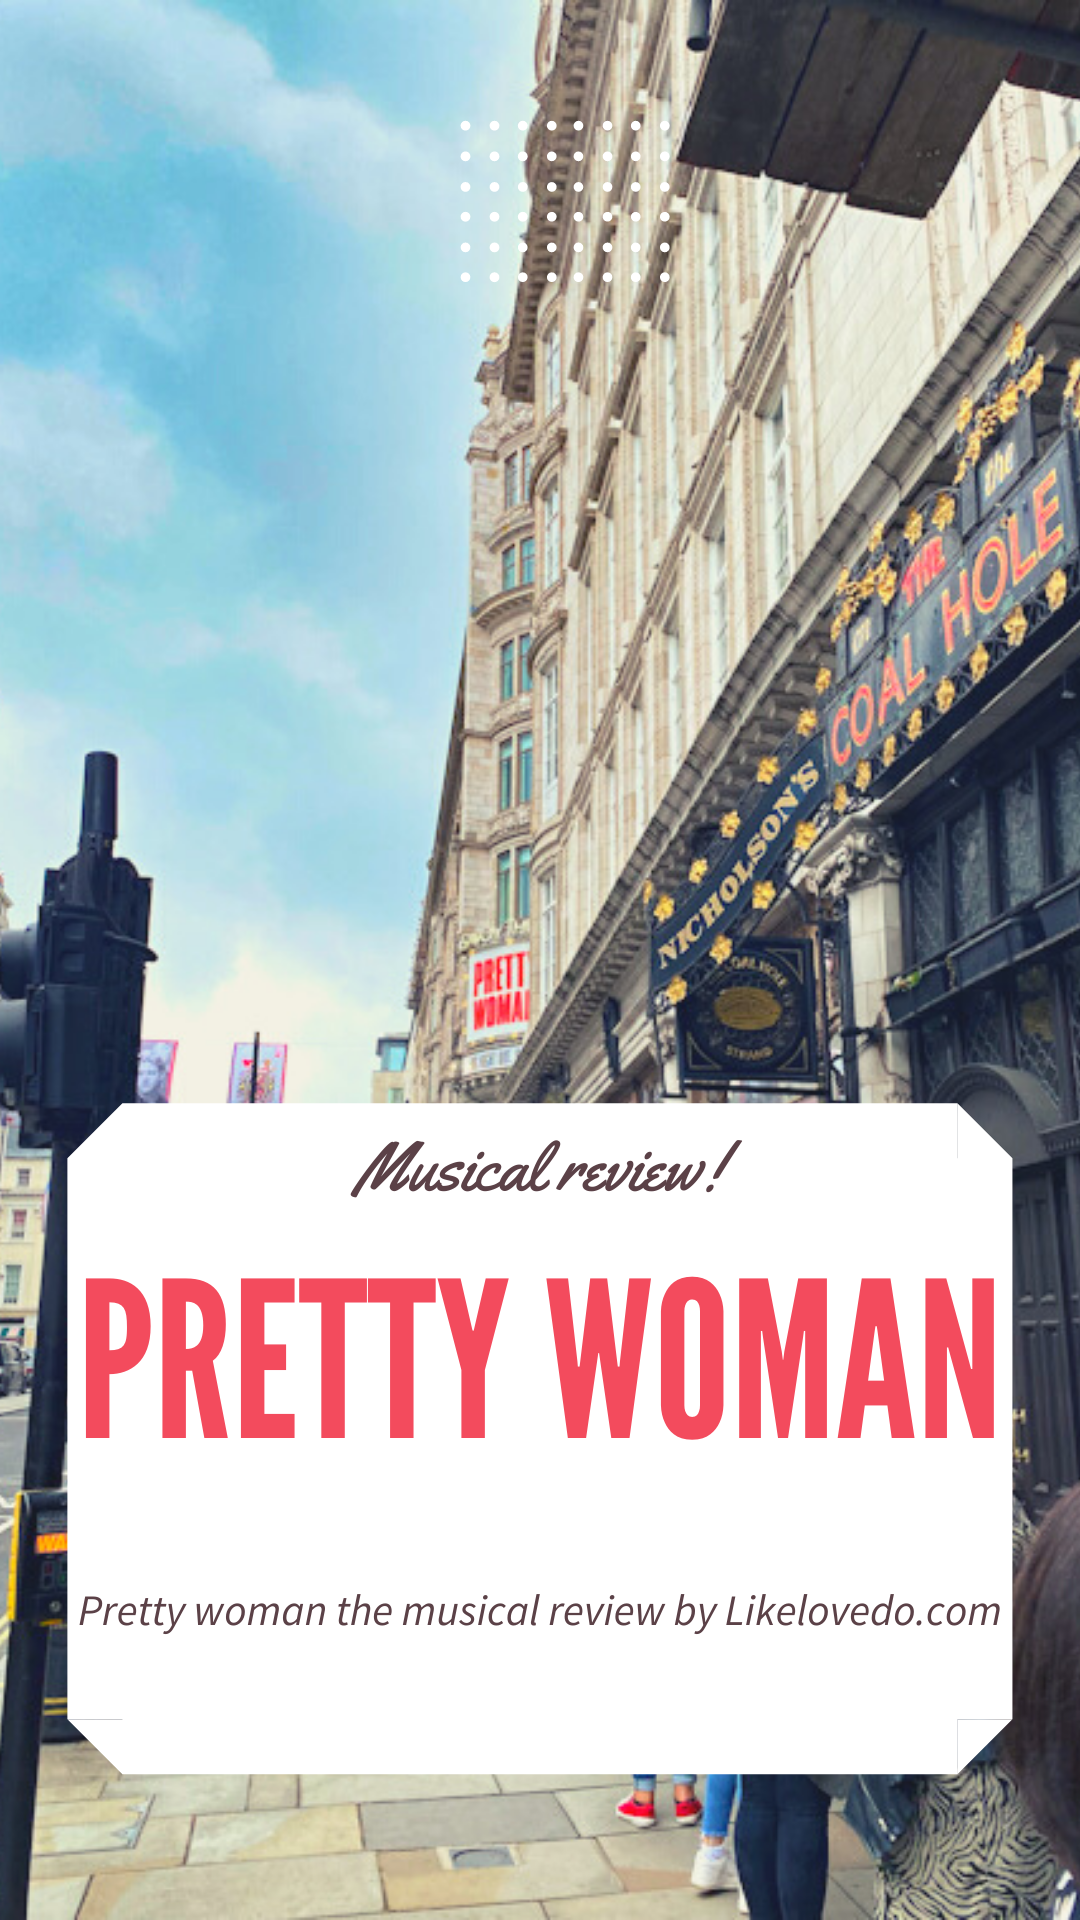 Pretty woman musical theatre review London Savoy